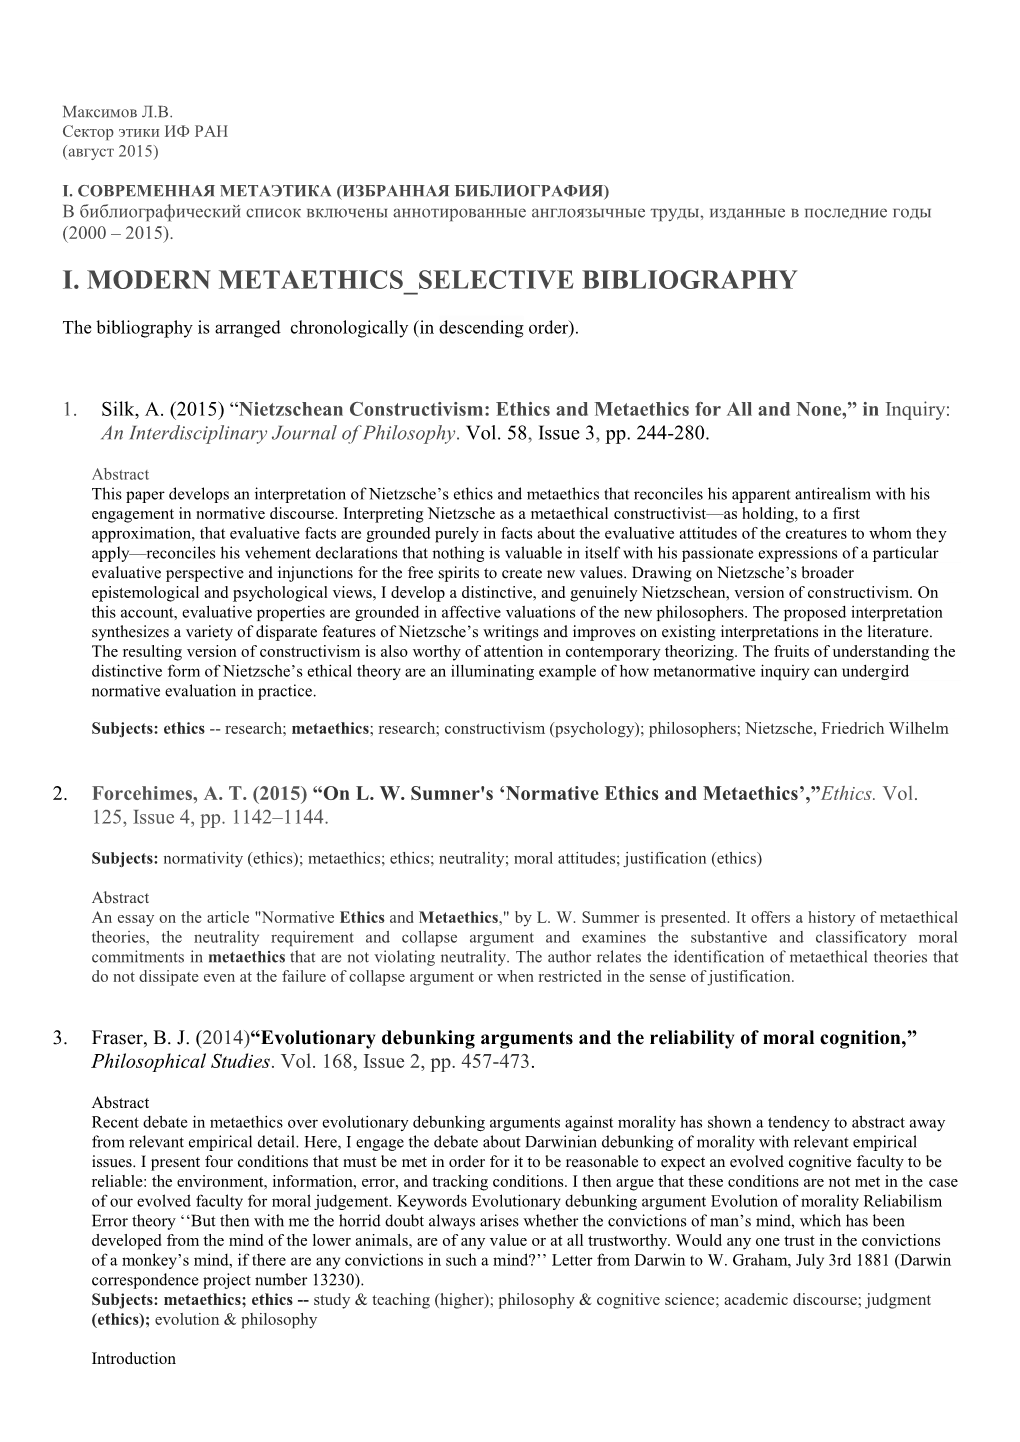 I. Modern Metaethics Selective Bibliography